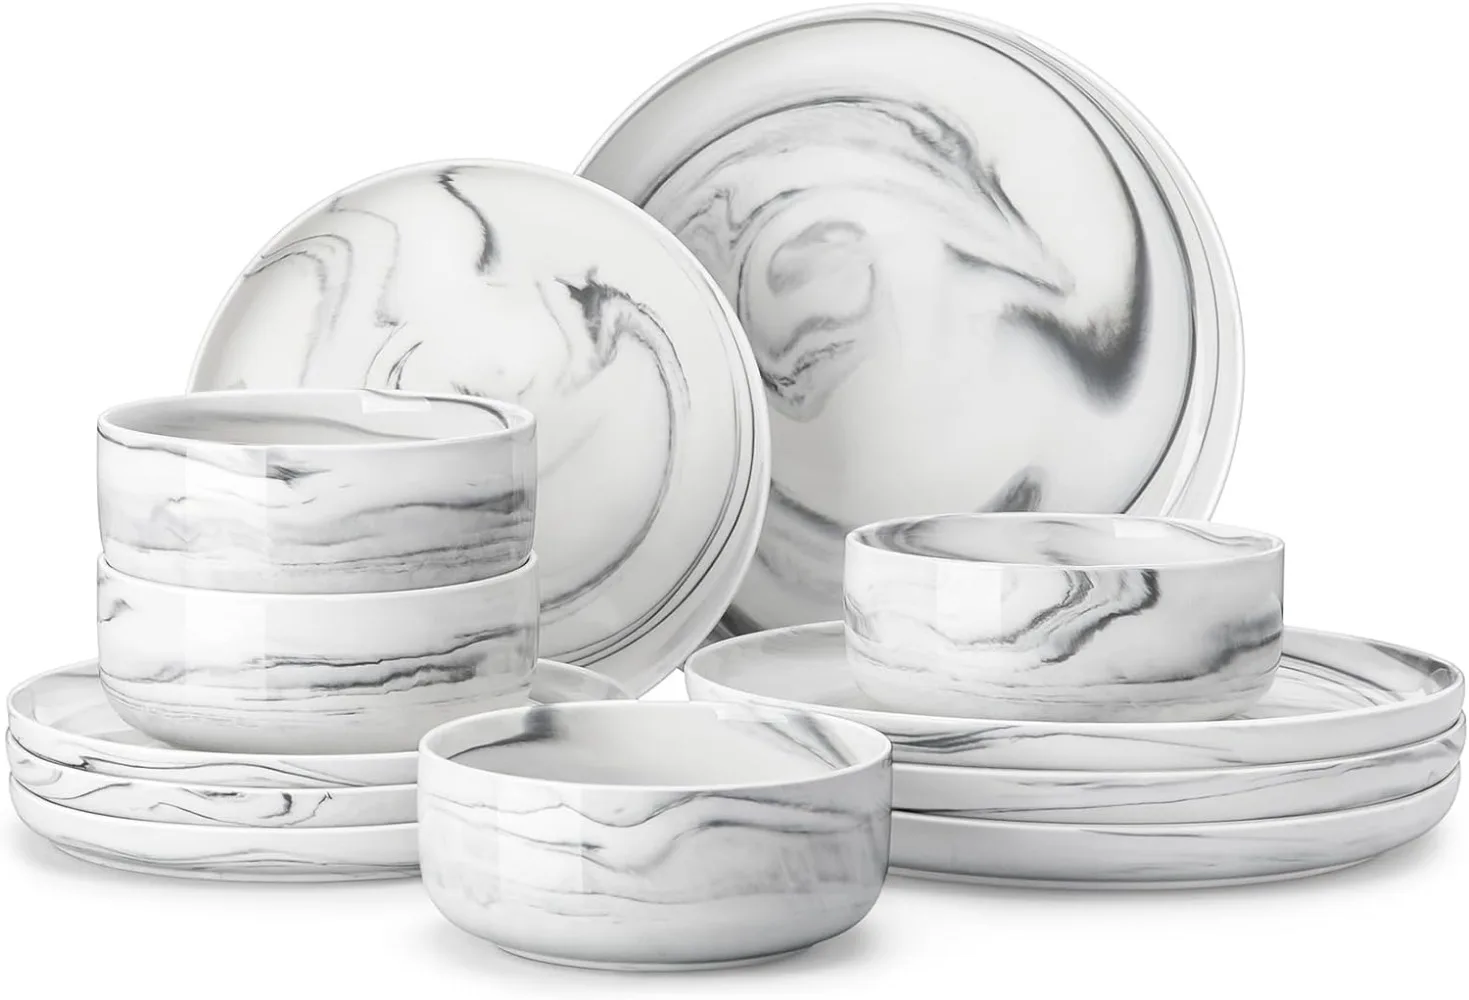 

MALACASA Plates and Bowls Sets, 12 Pieces Porcelain Dinnerware Sets Dishware Sets Chip Resistant Ceramic Dish Set Dining Dinner